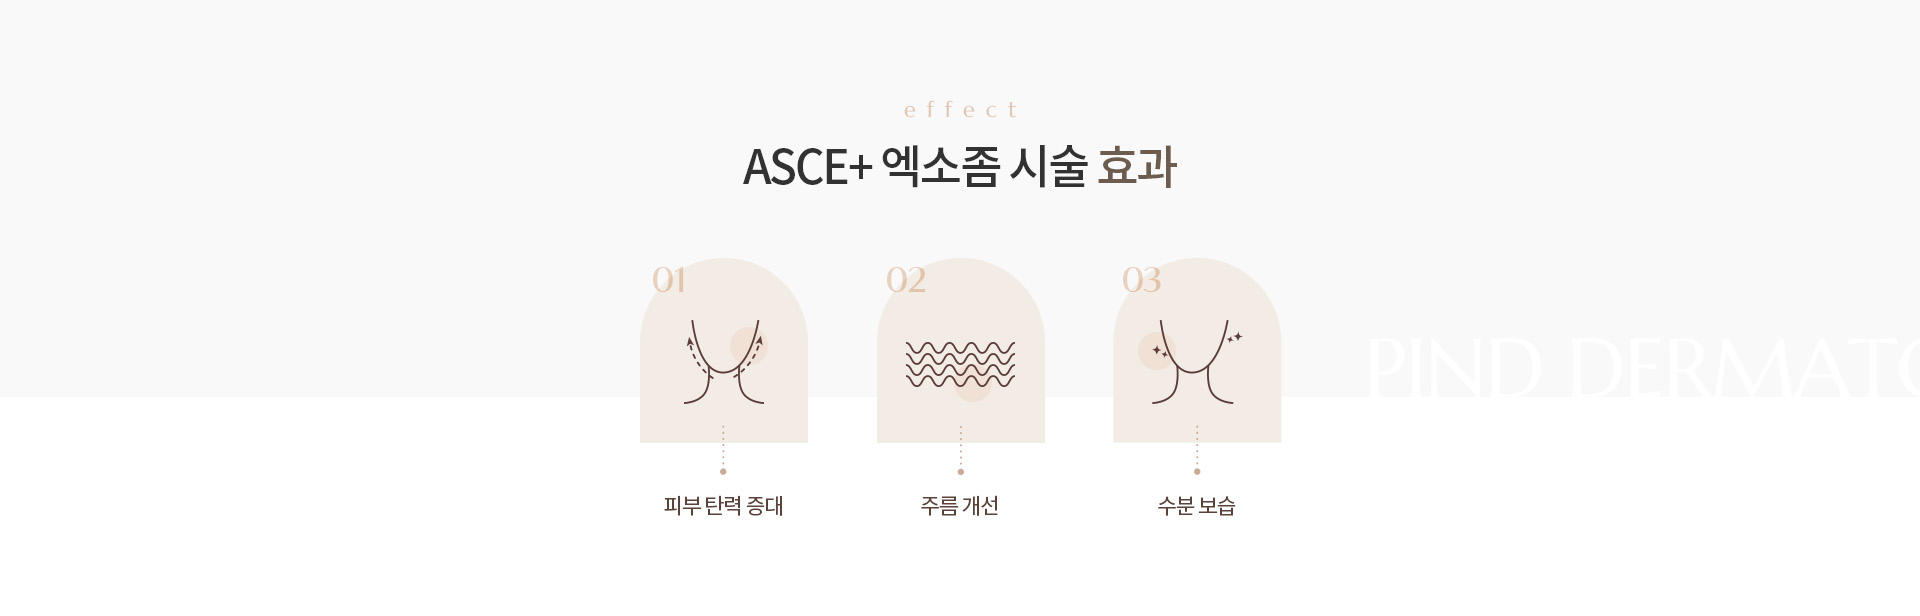 ASCE+ 엑소좀 상세02